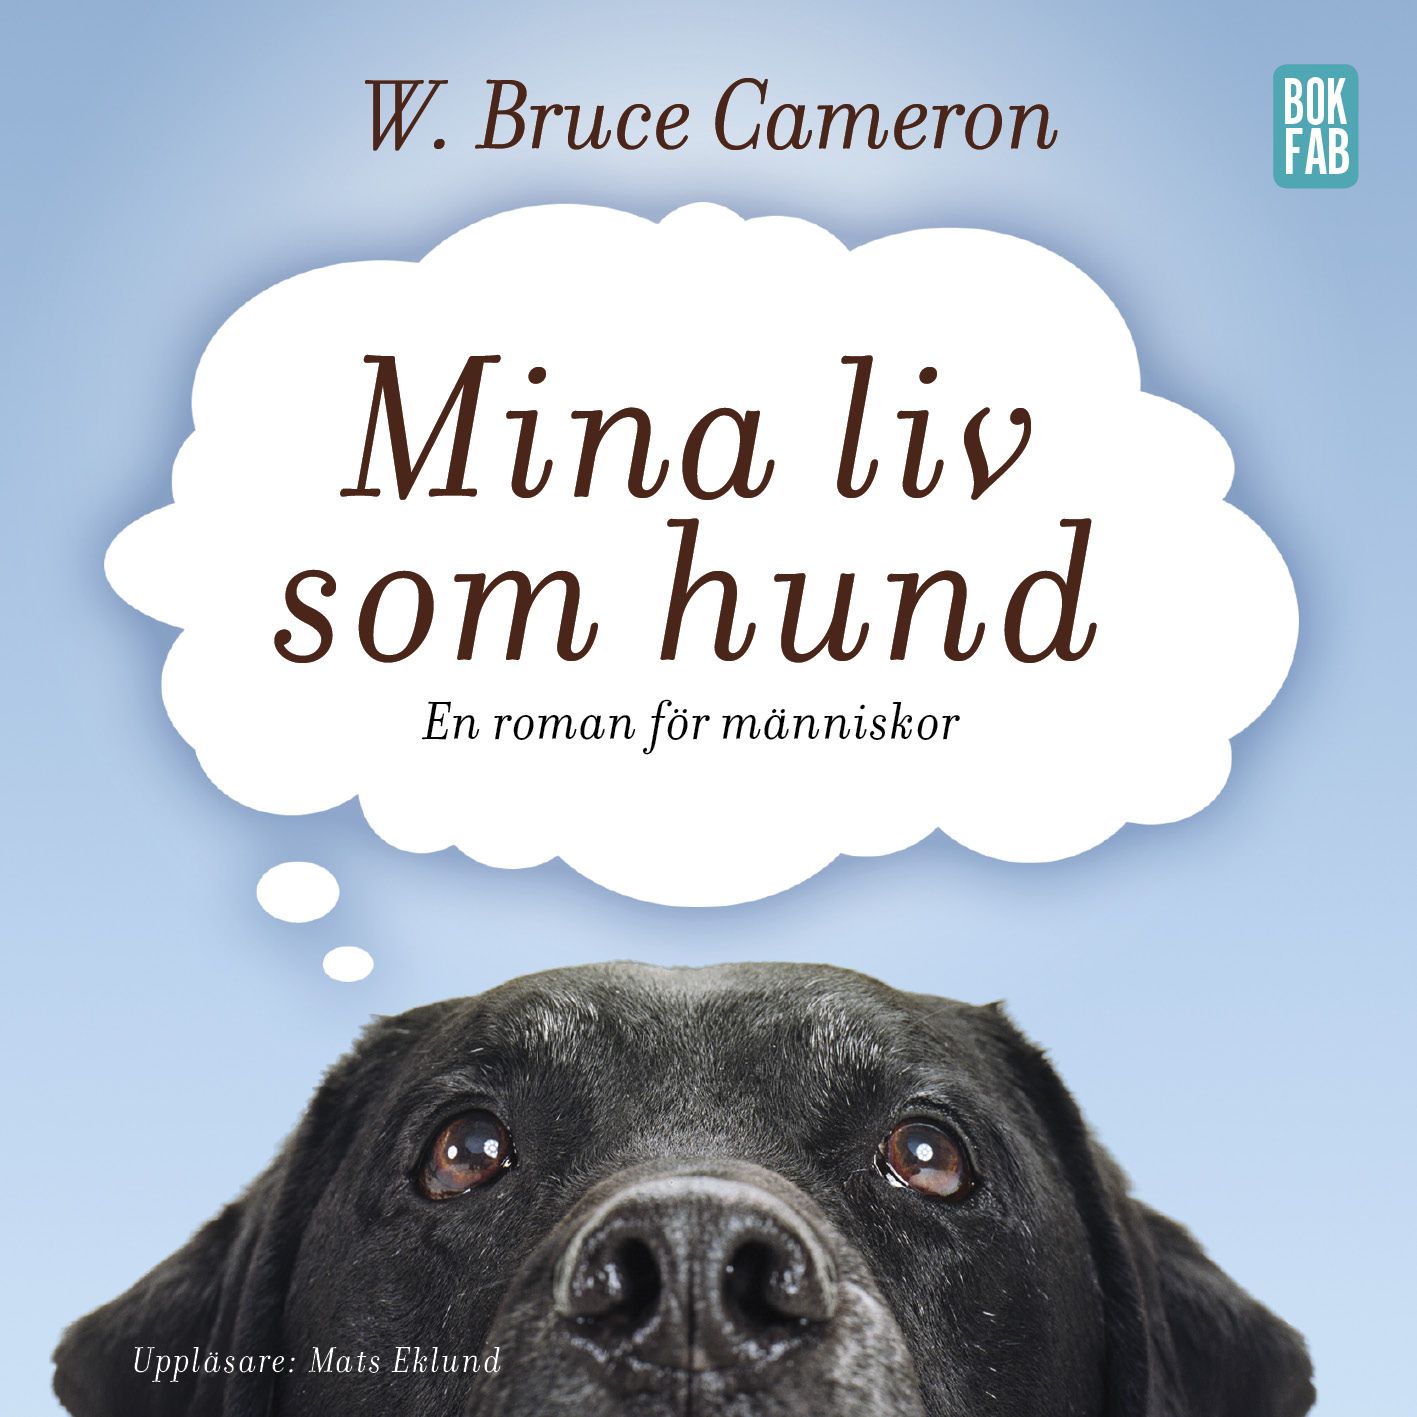 Mina liv som hund, audiobook by W. Bruce Cameron